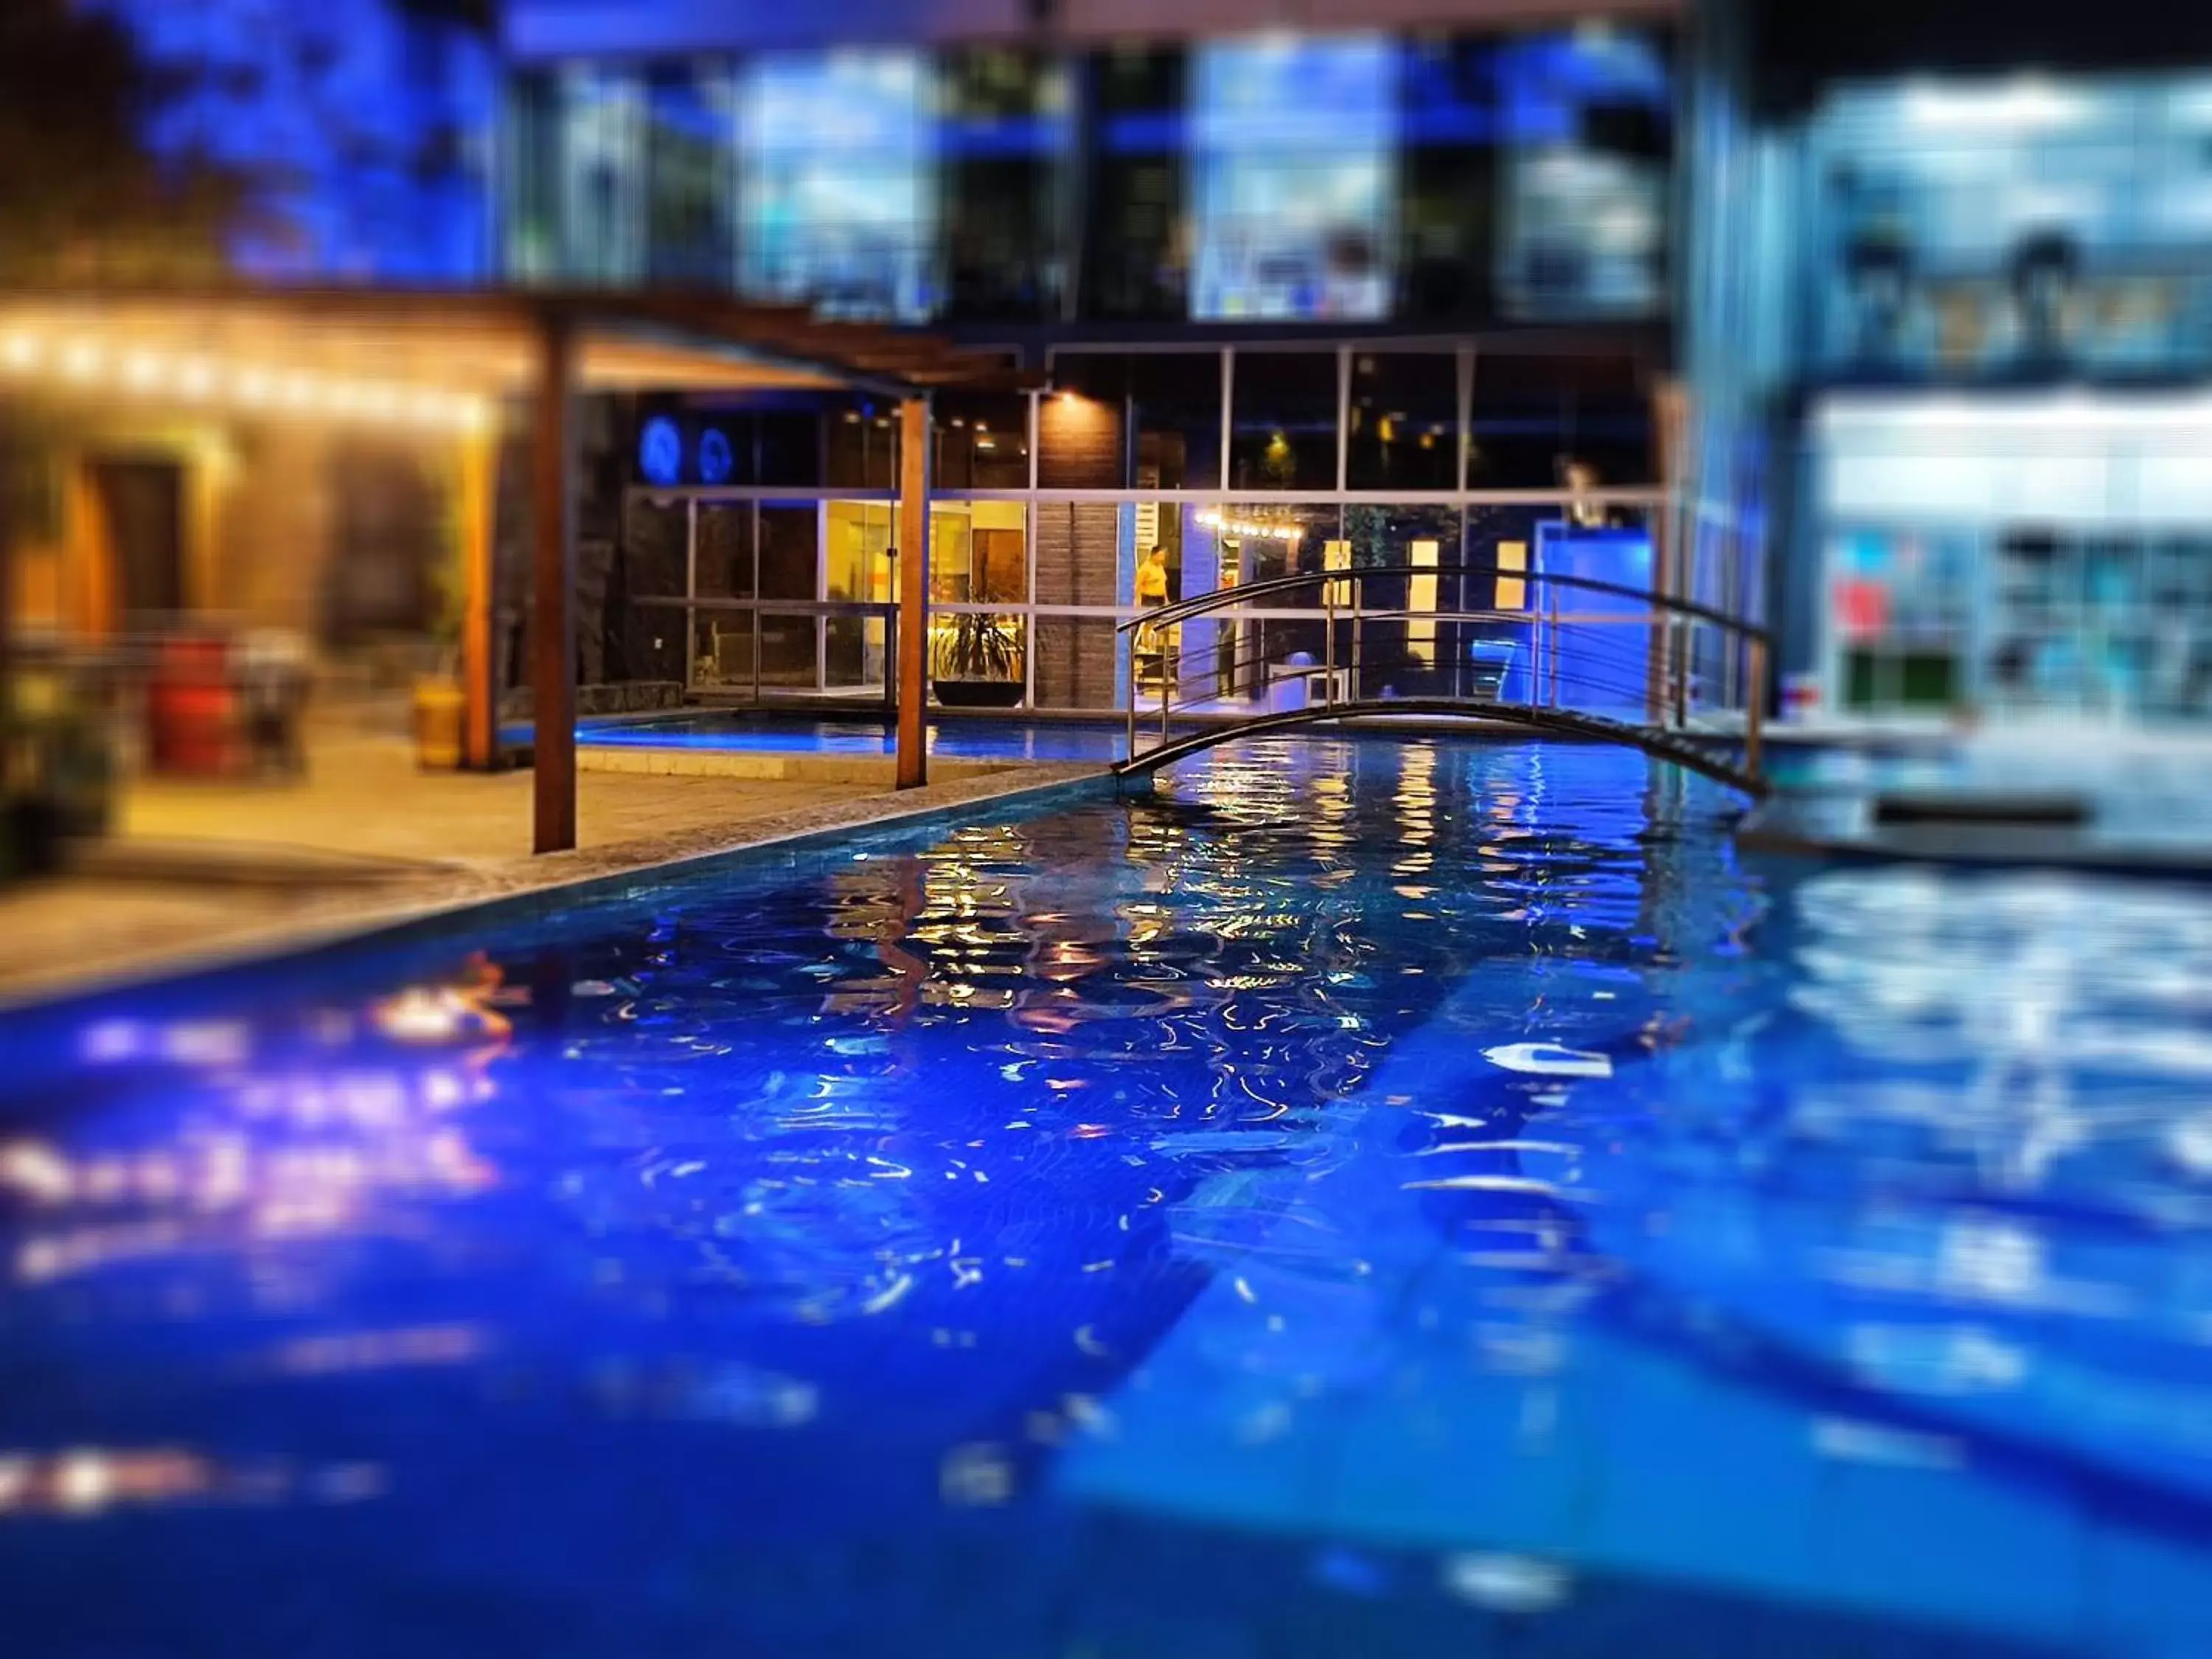 Swimming Pool in Hotel Los Ceibos